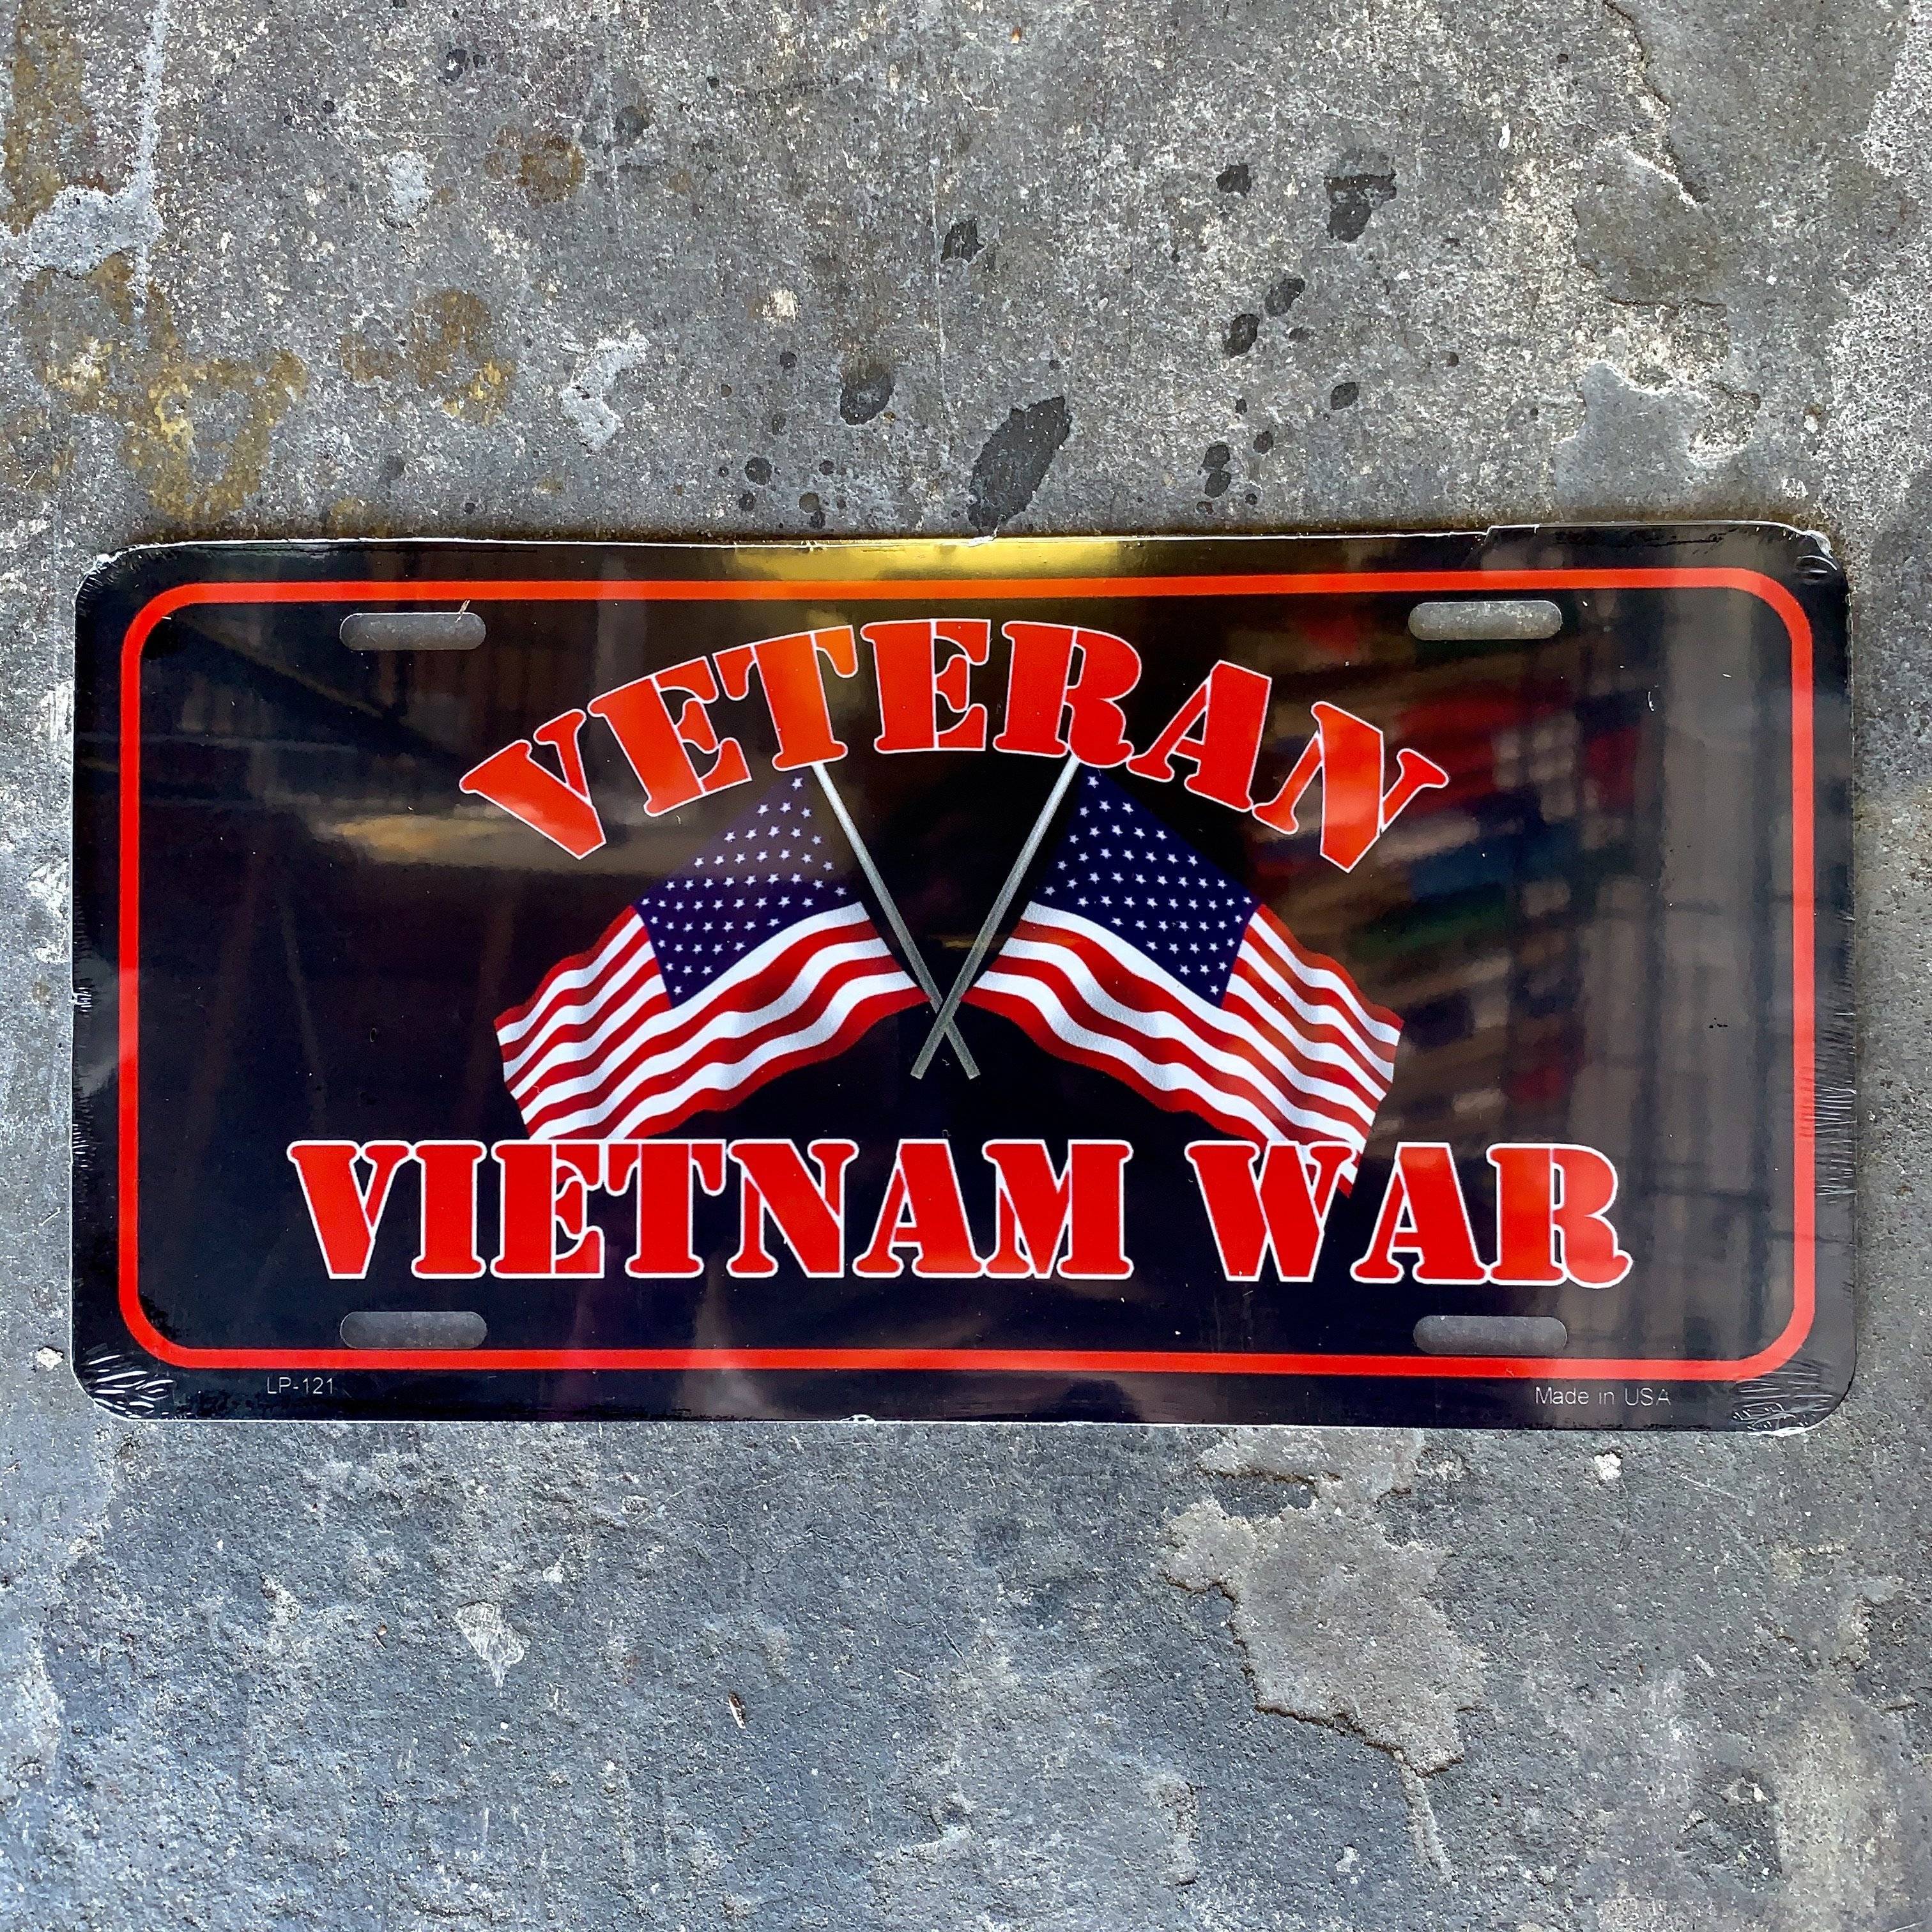 Vietnam War Veteran License Plate.